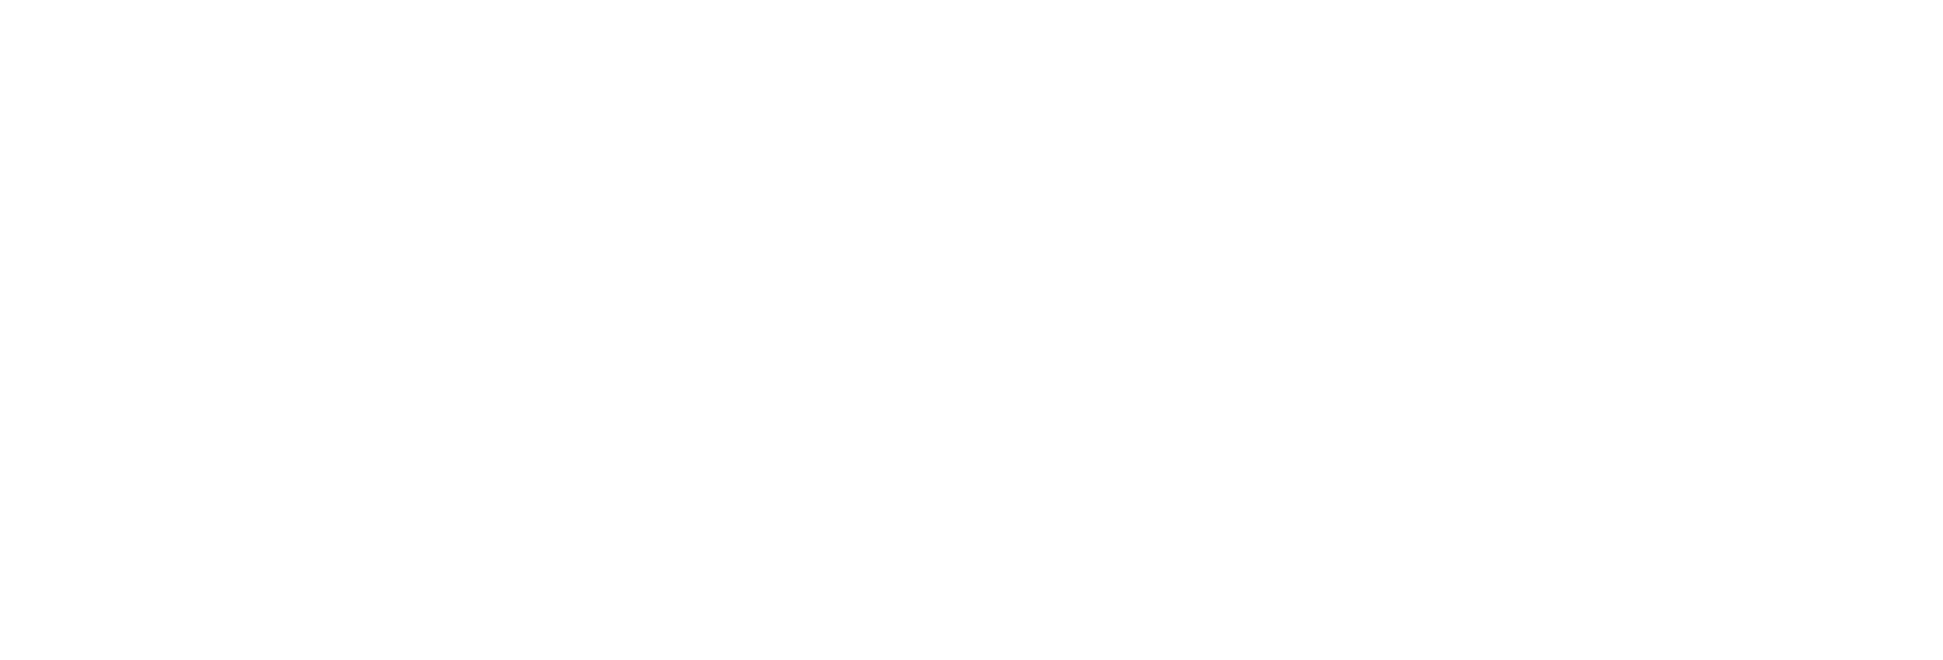 Edge of Indy